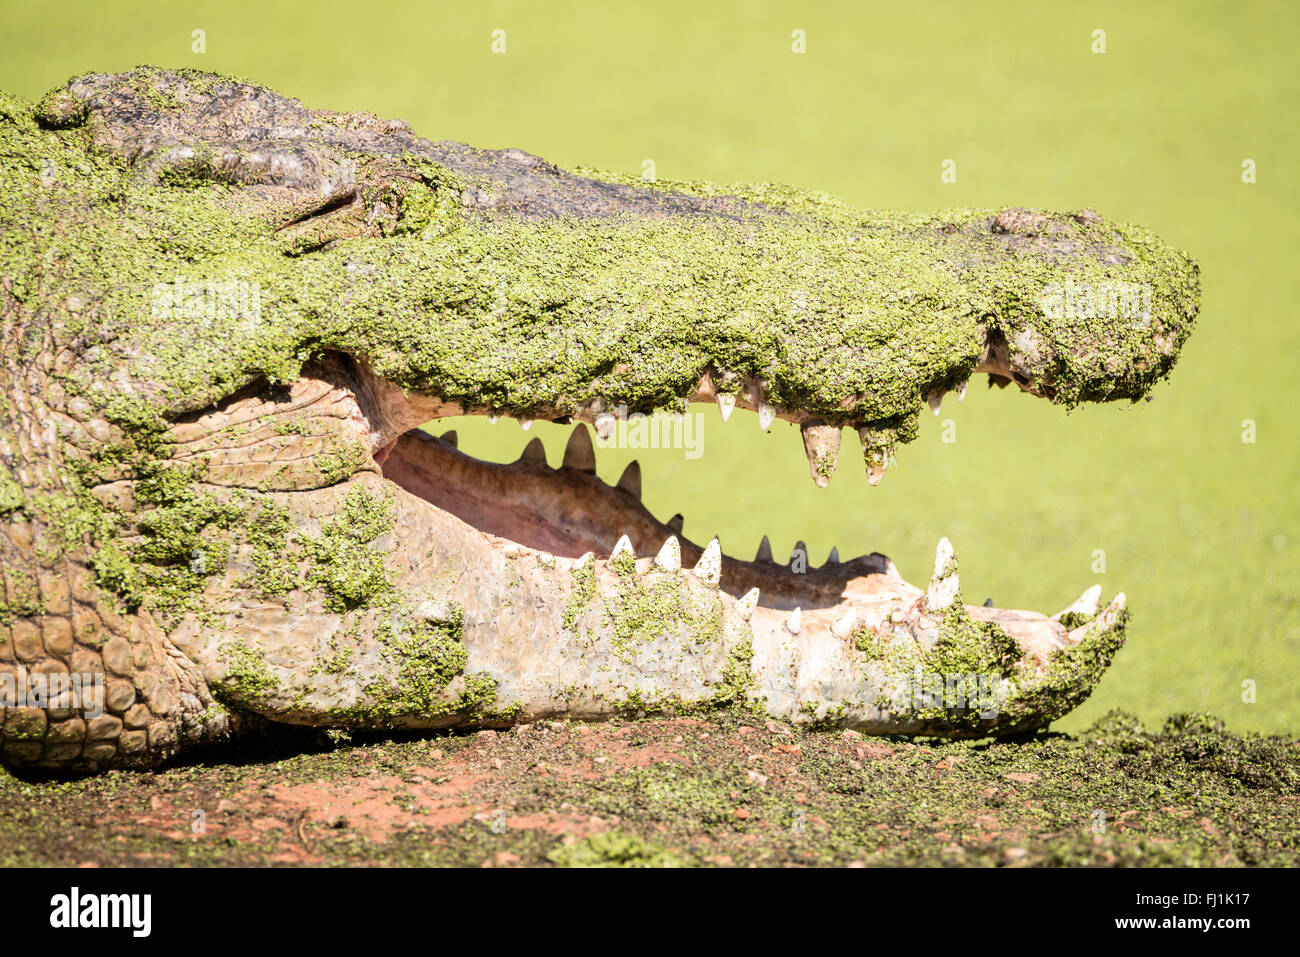 a-fully-grown-saltwater-male-crocodile-covered-in-green-algae-waiting-FJ1K17.jpg